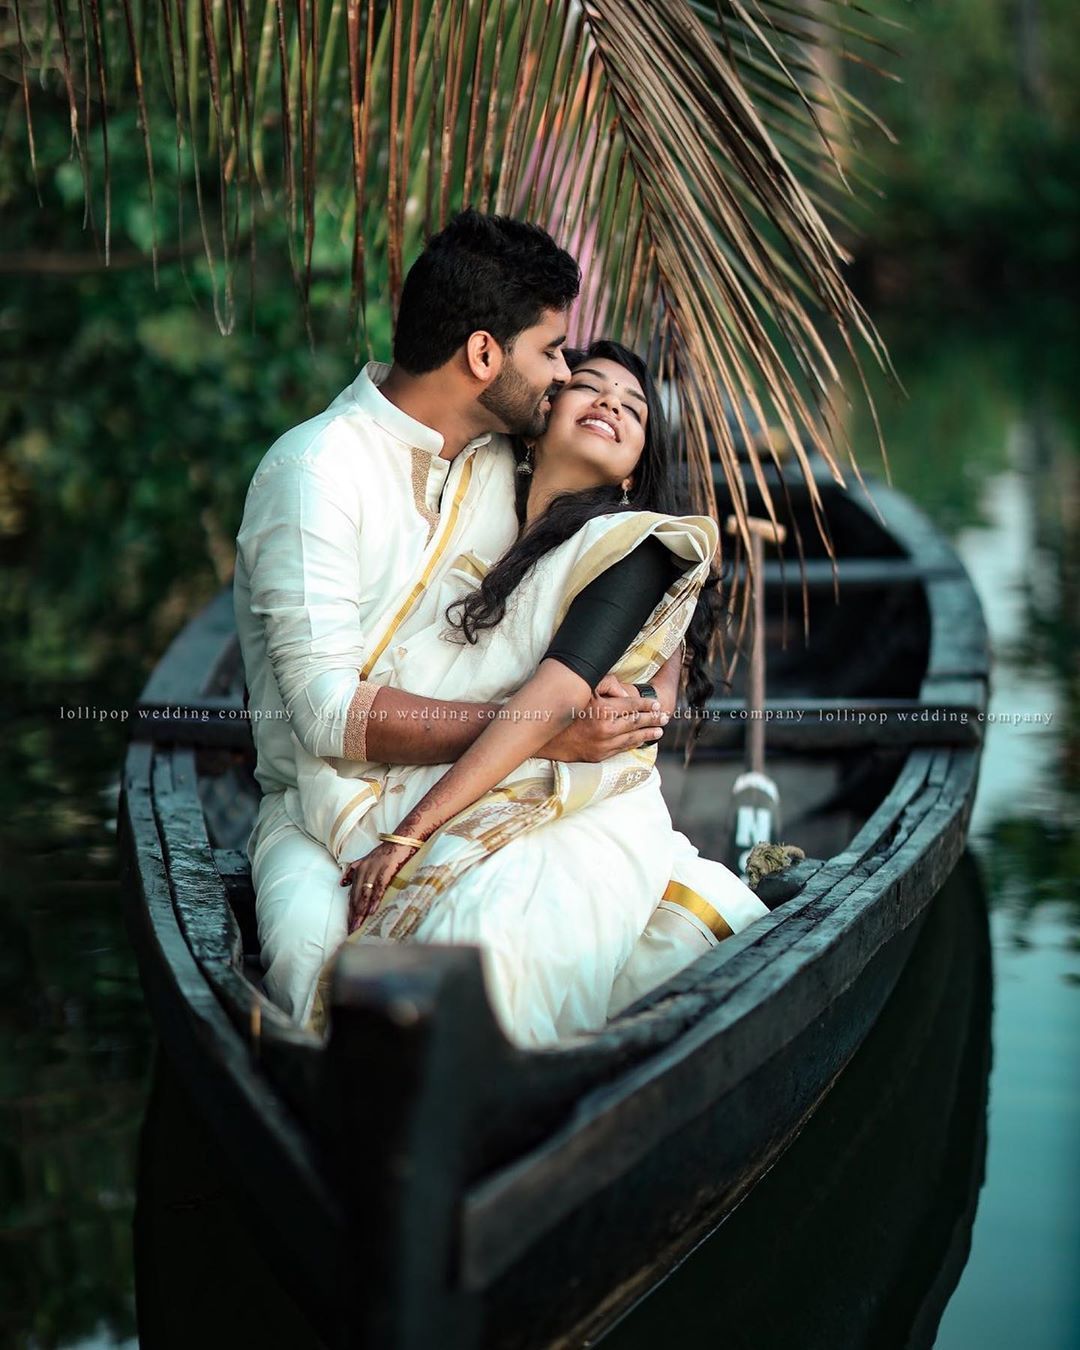 Kerala Wedding Styles on Instagram: “